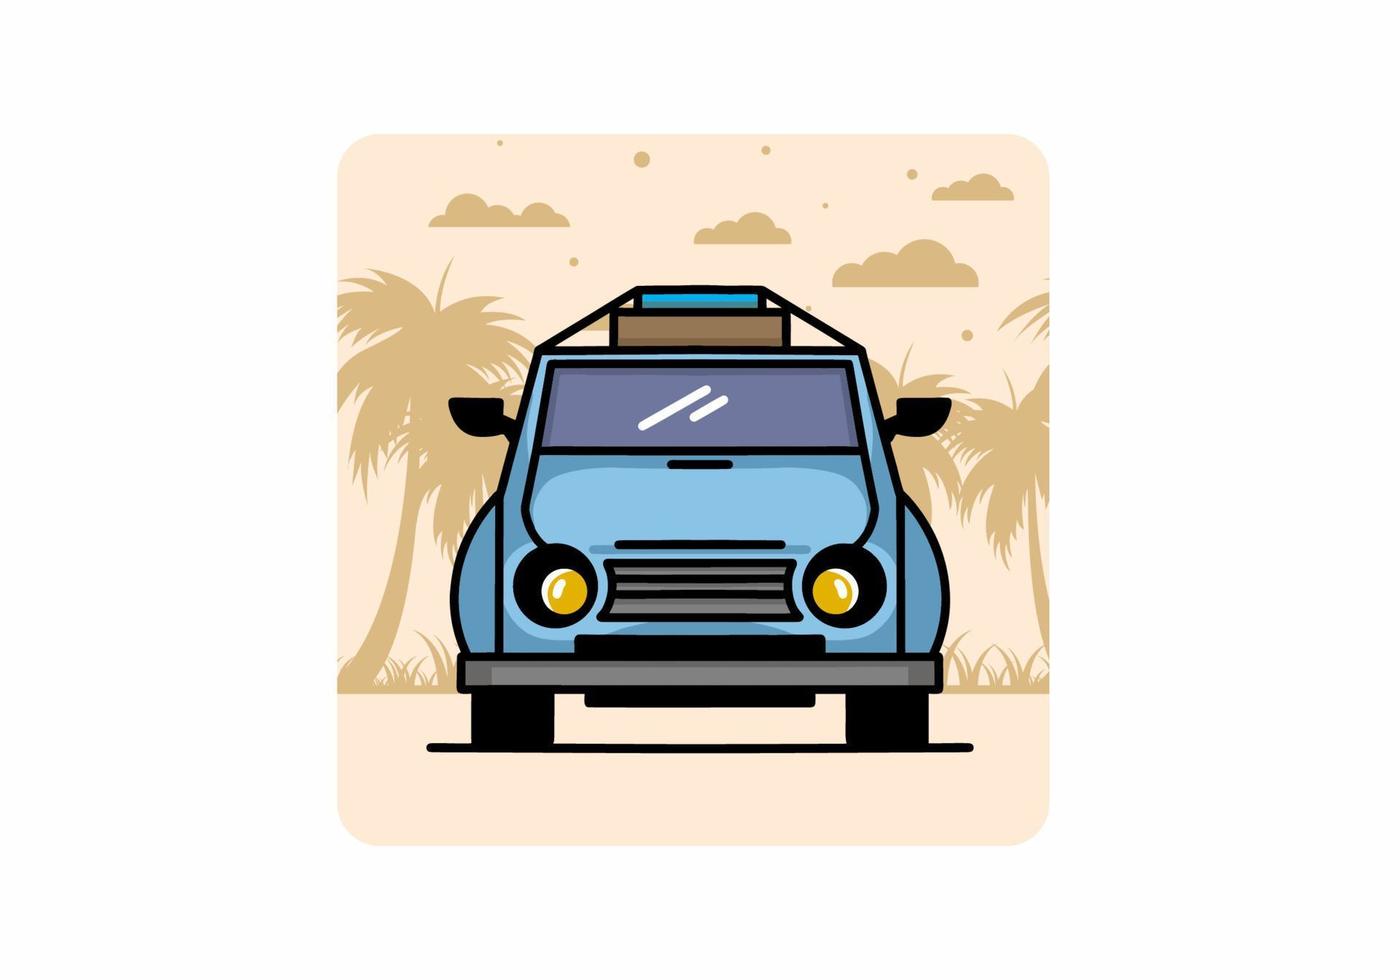 Holiday in car illustration design vector